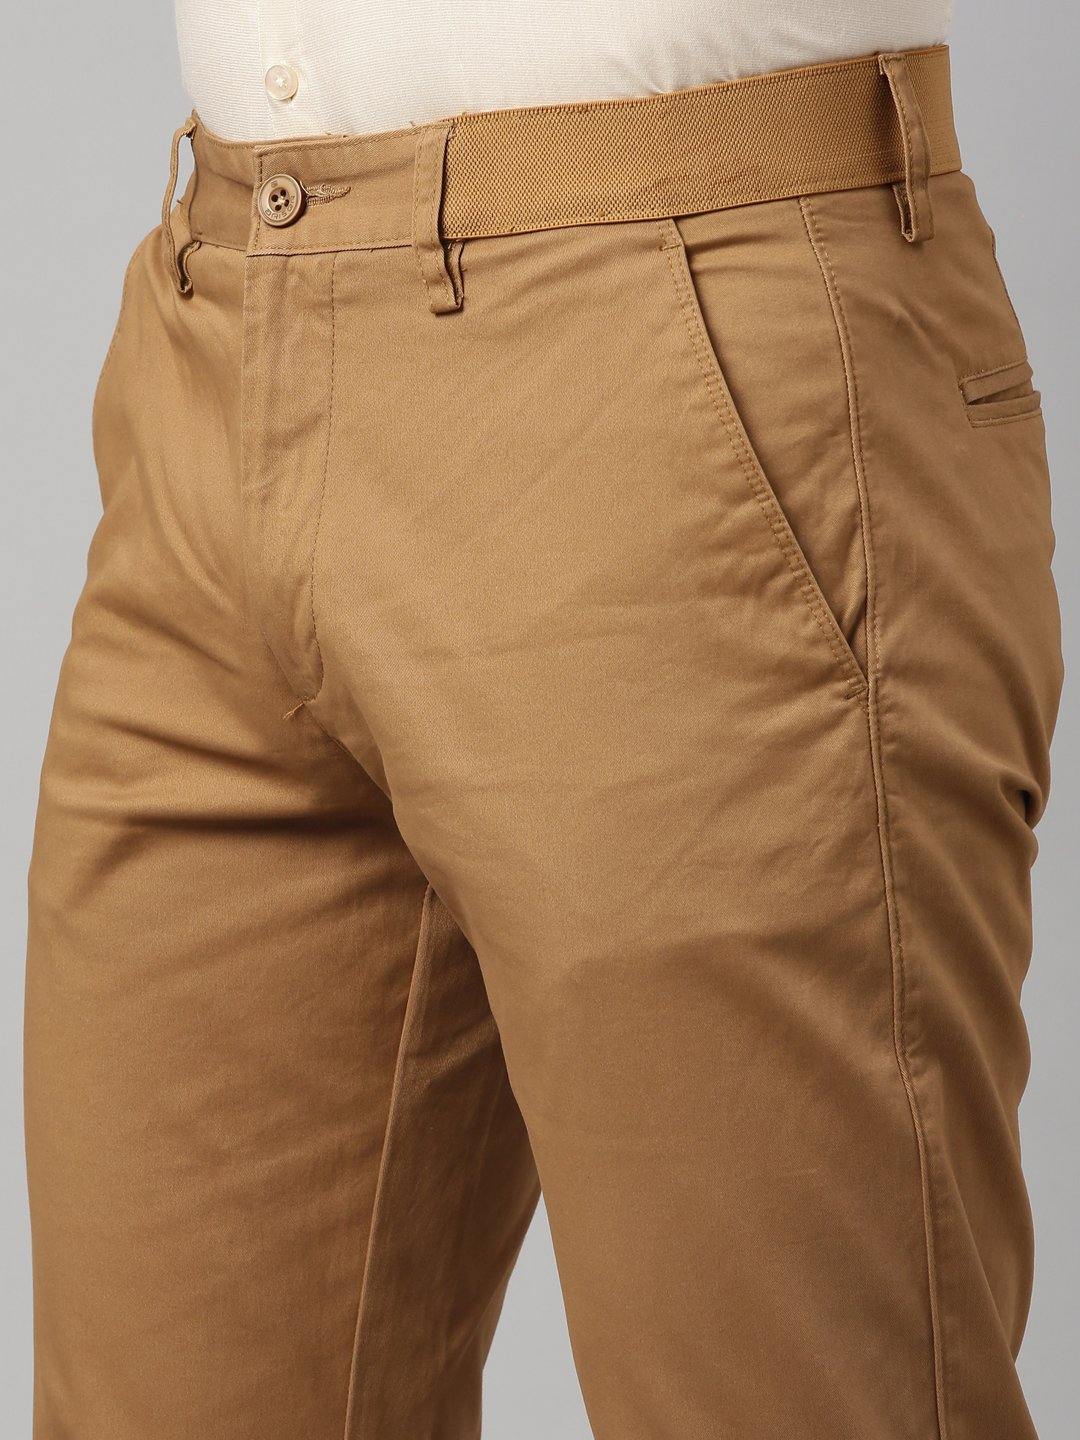 Buy Olive Trousers  Pants for Men by ADBUCKS Online  Ajiocom